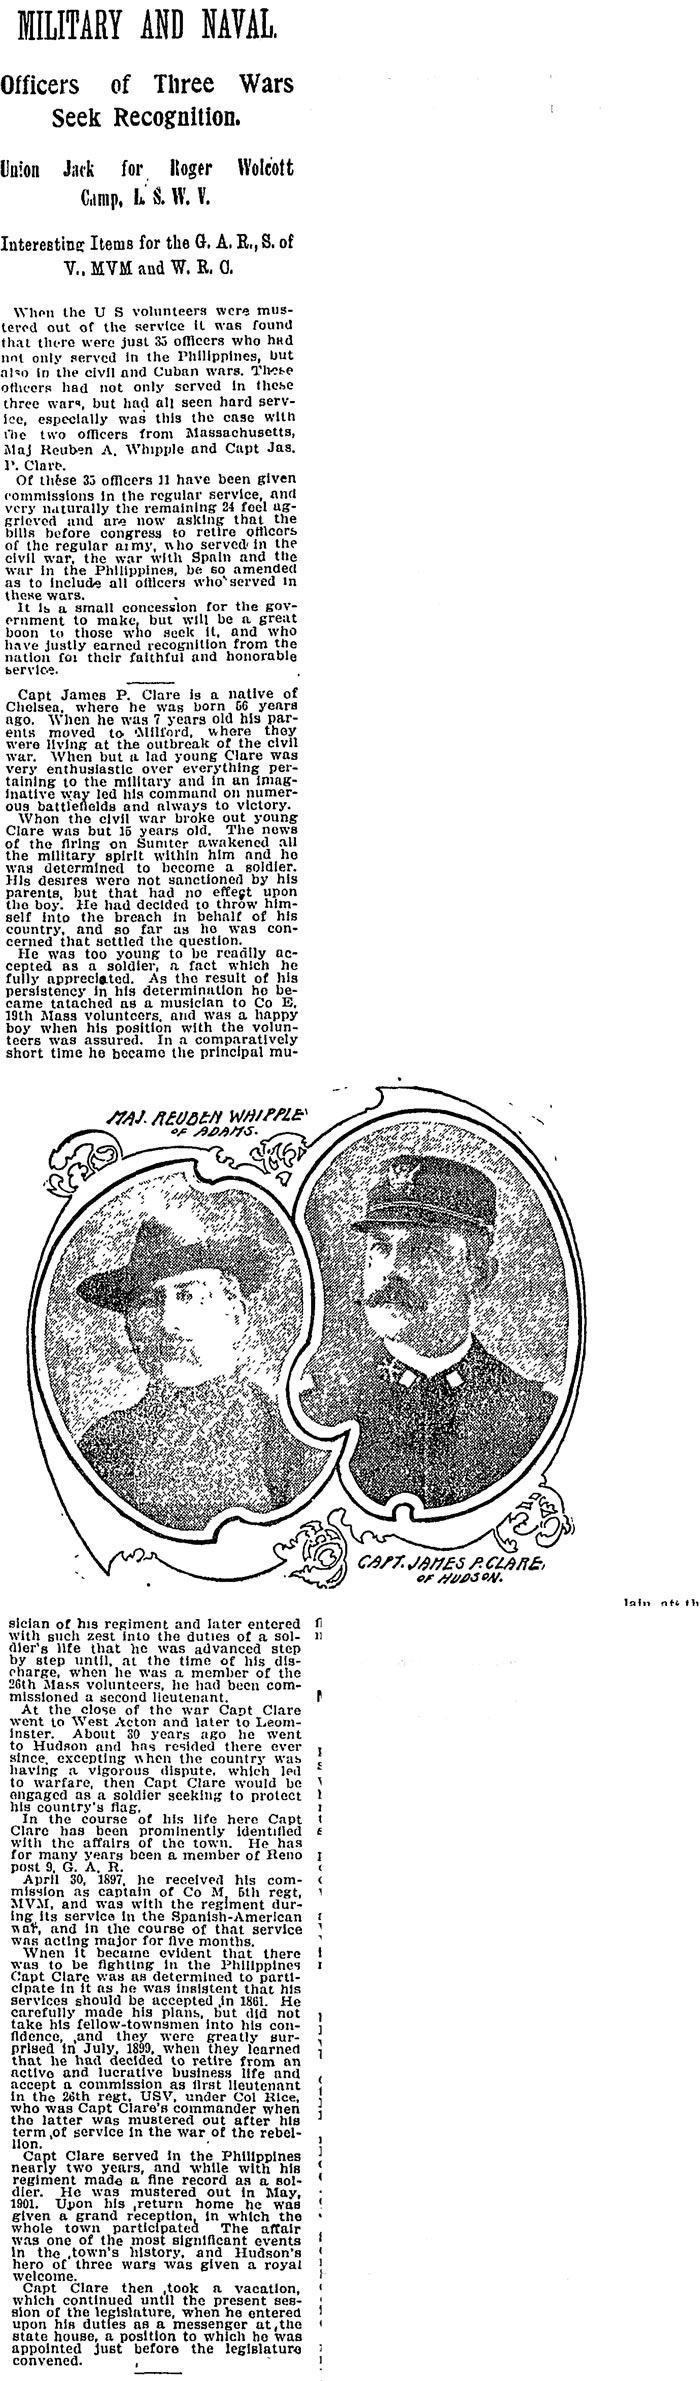 Boston Globe, March 9, 1902